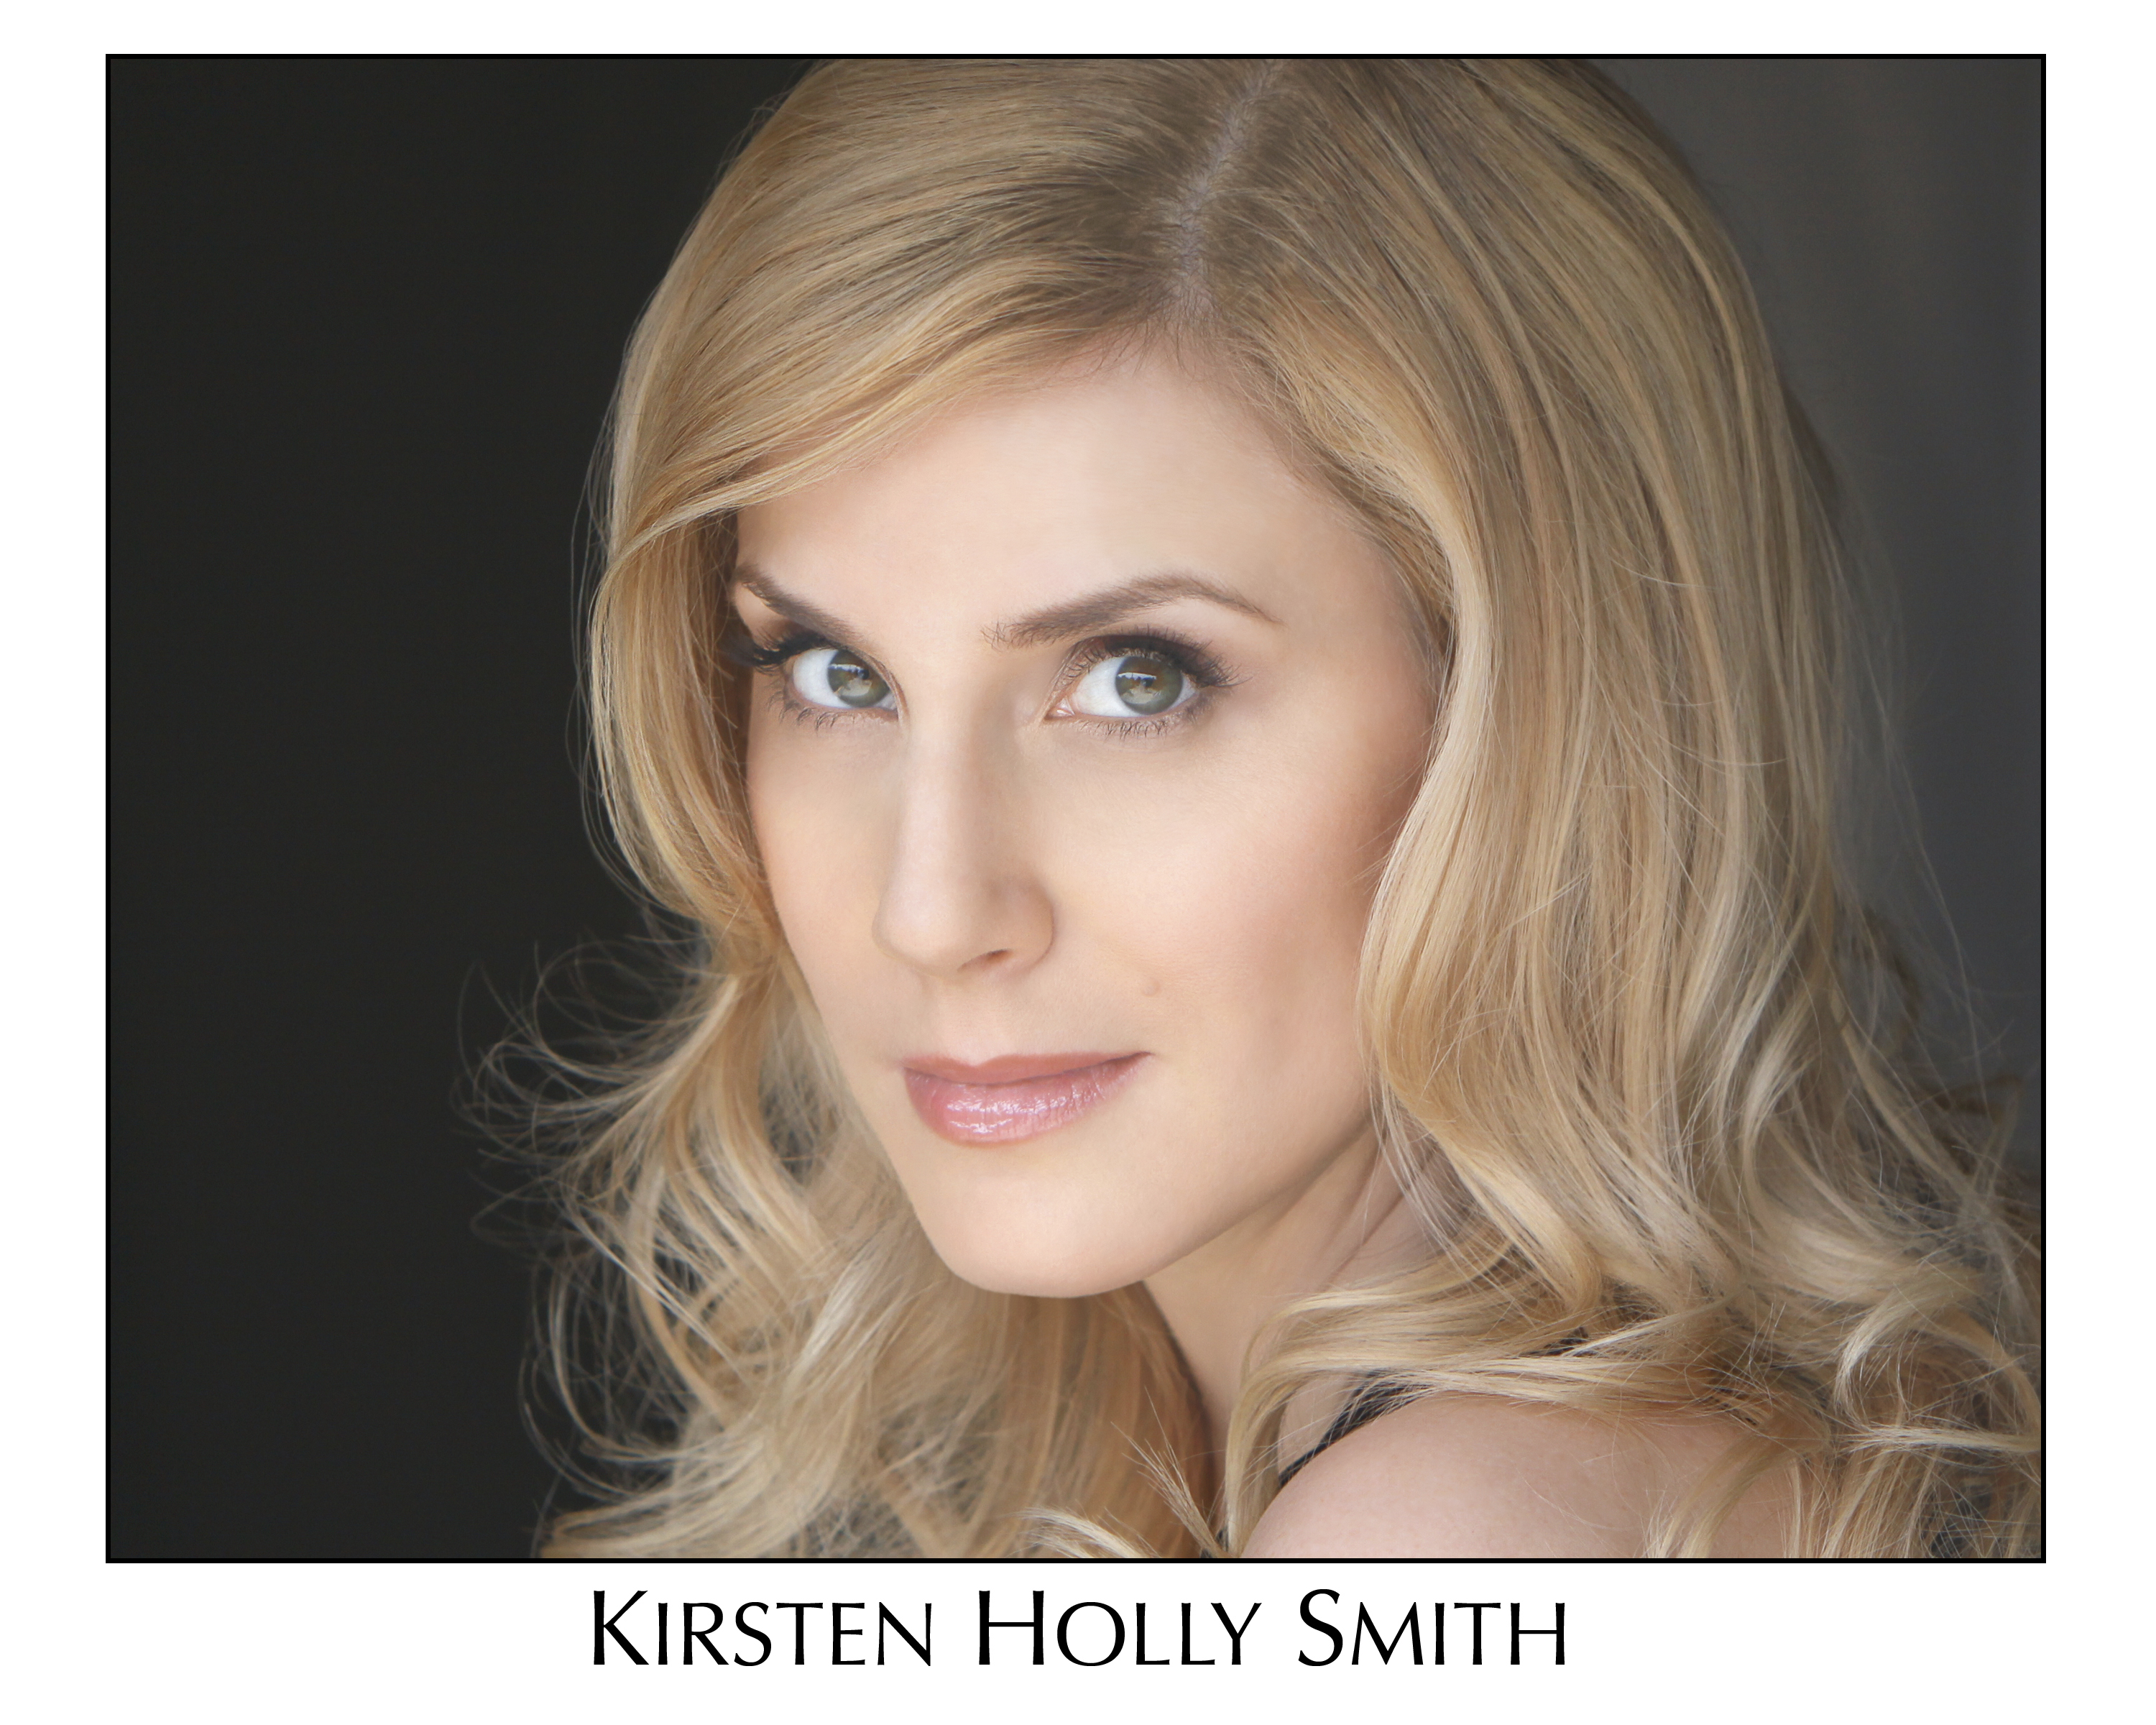 Kirsten Holly Smith